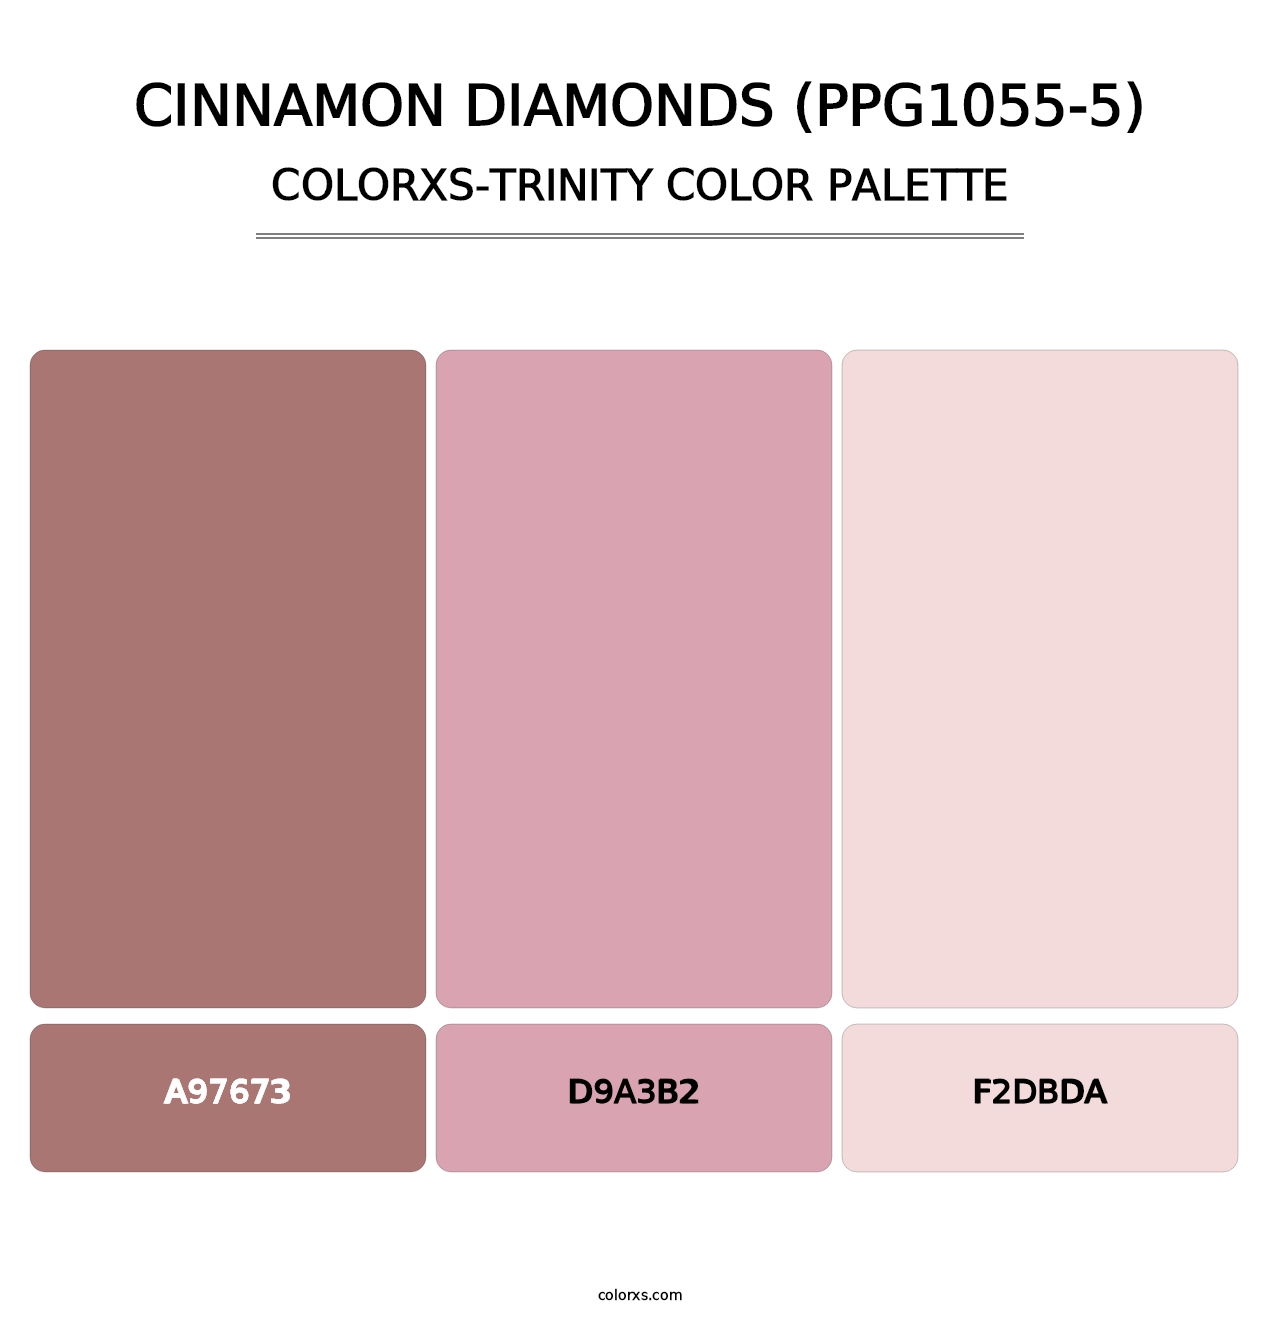 Cinnamon Diamonds (PPG1055-5) - Colorxs Trinity Palette